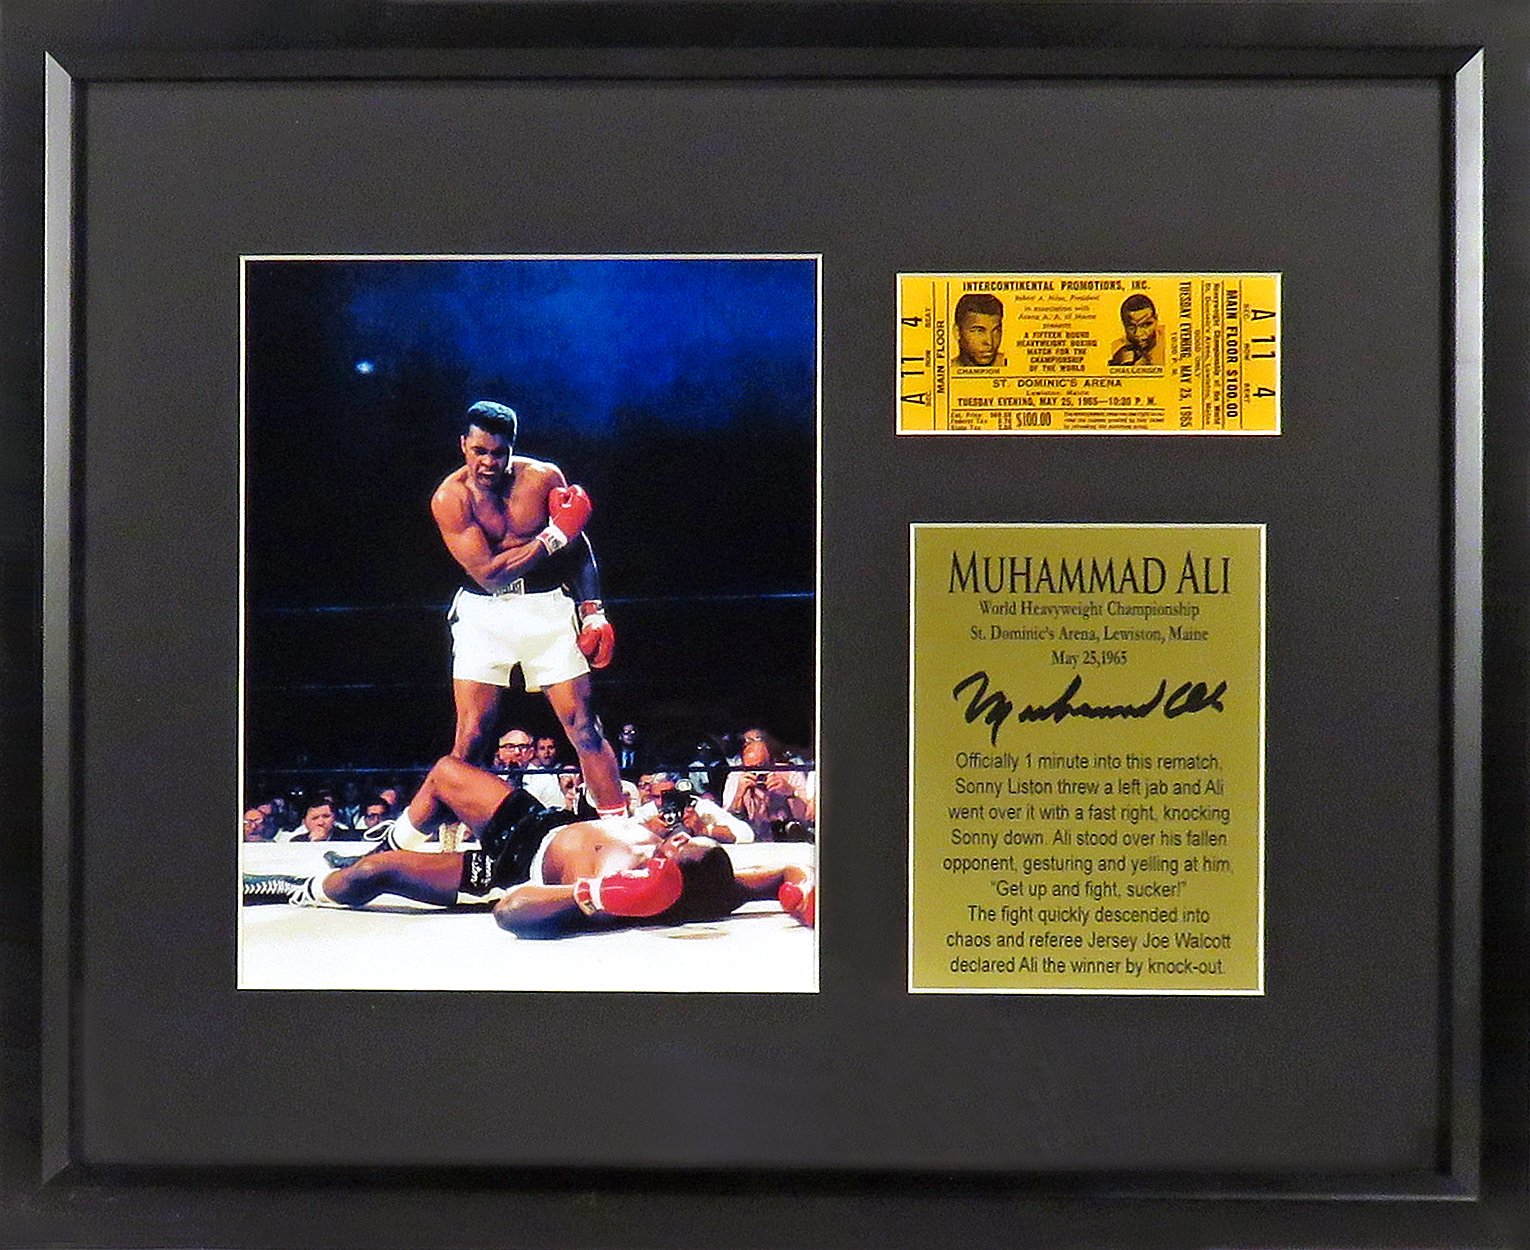 Muhammad Ali “Heavyweight Champion” 8x10 Photograph w/Ticket Framed Display (Engraved Series)